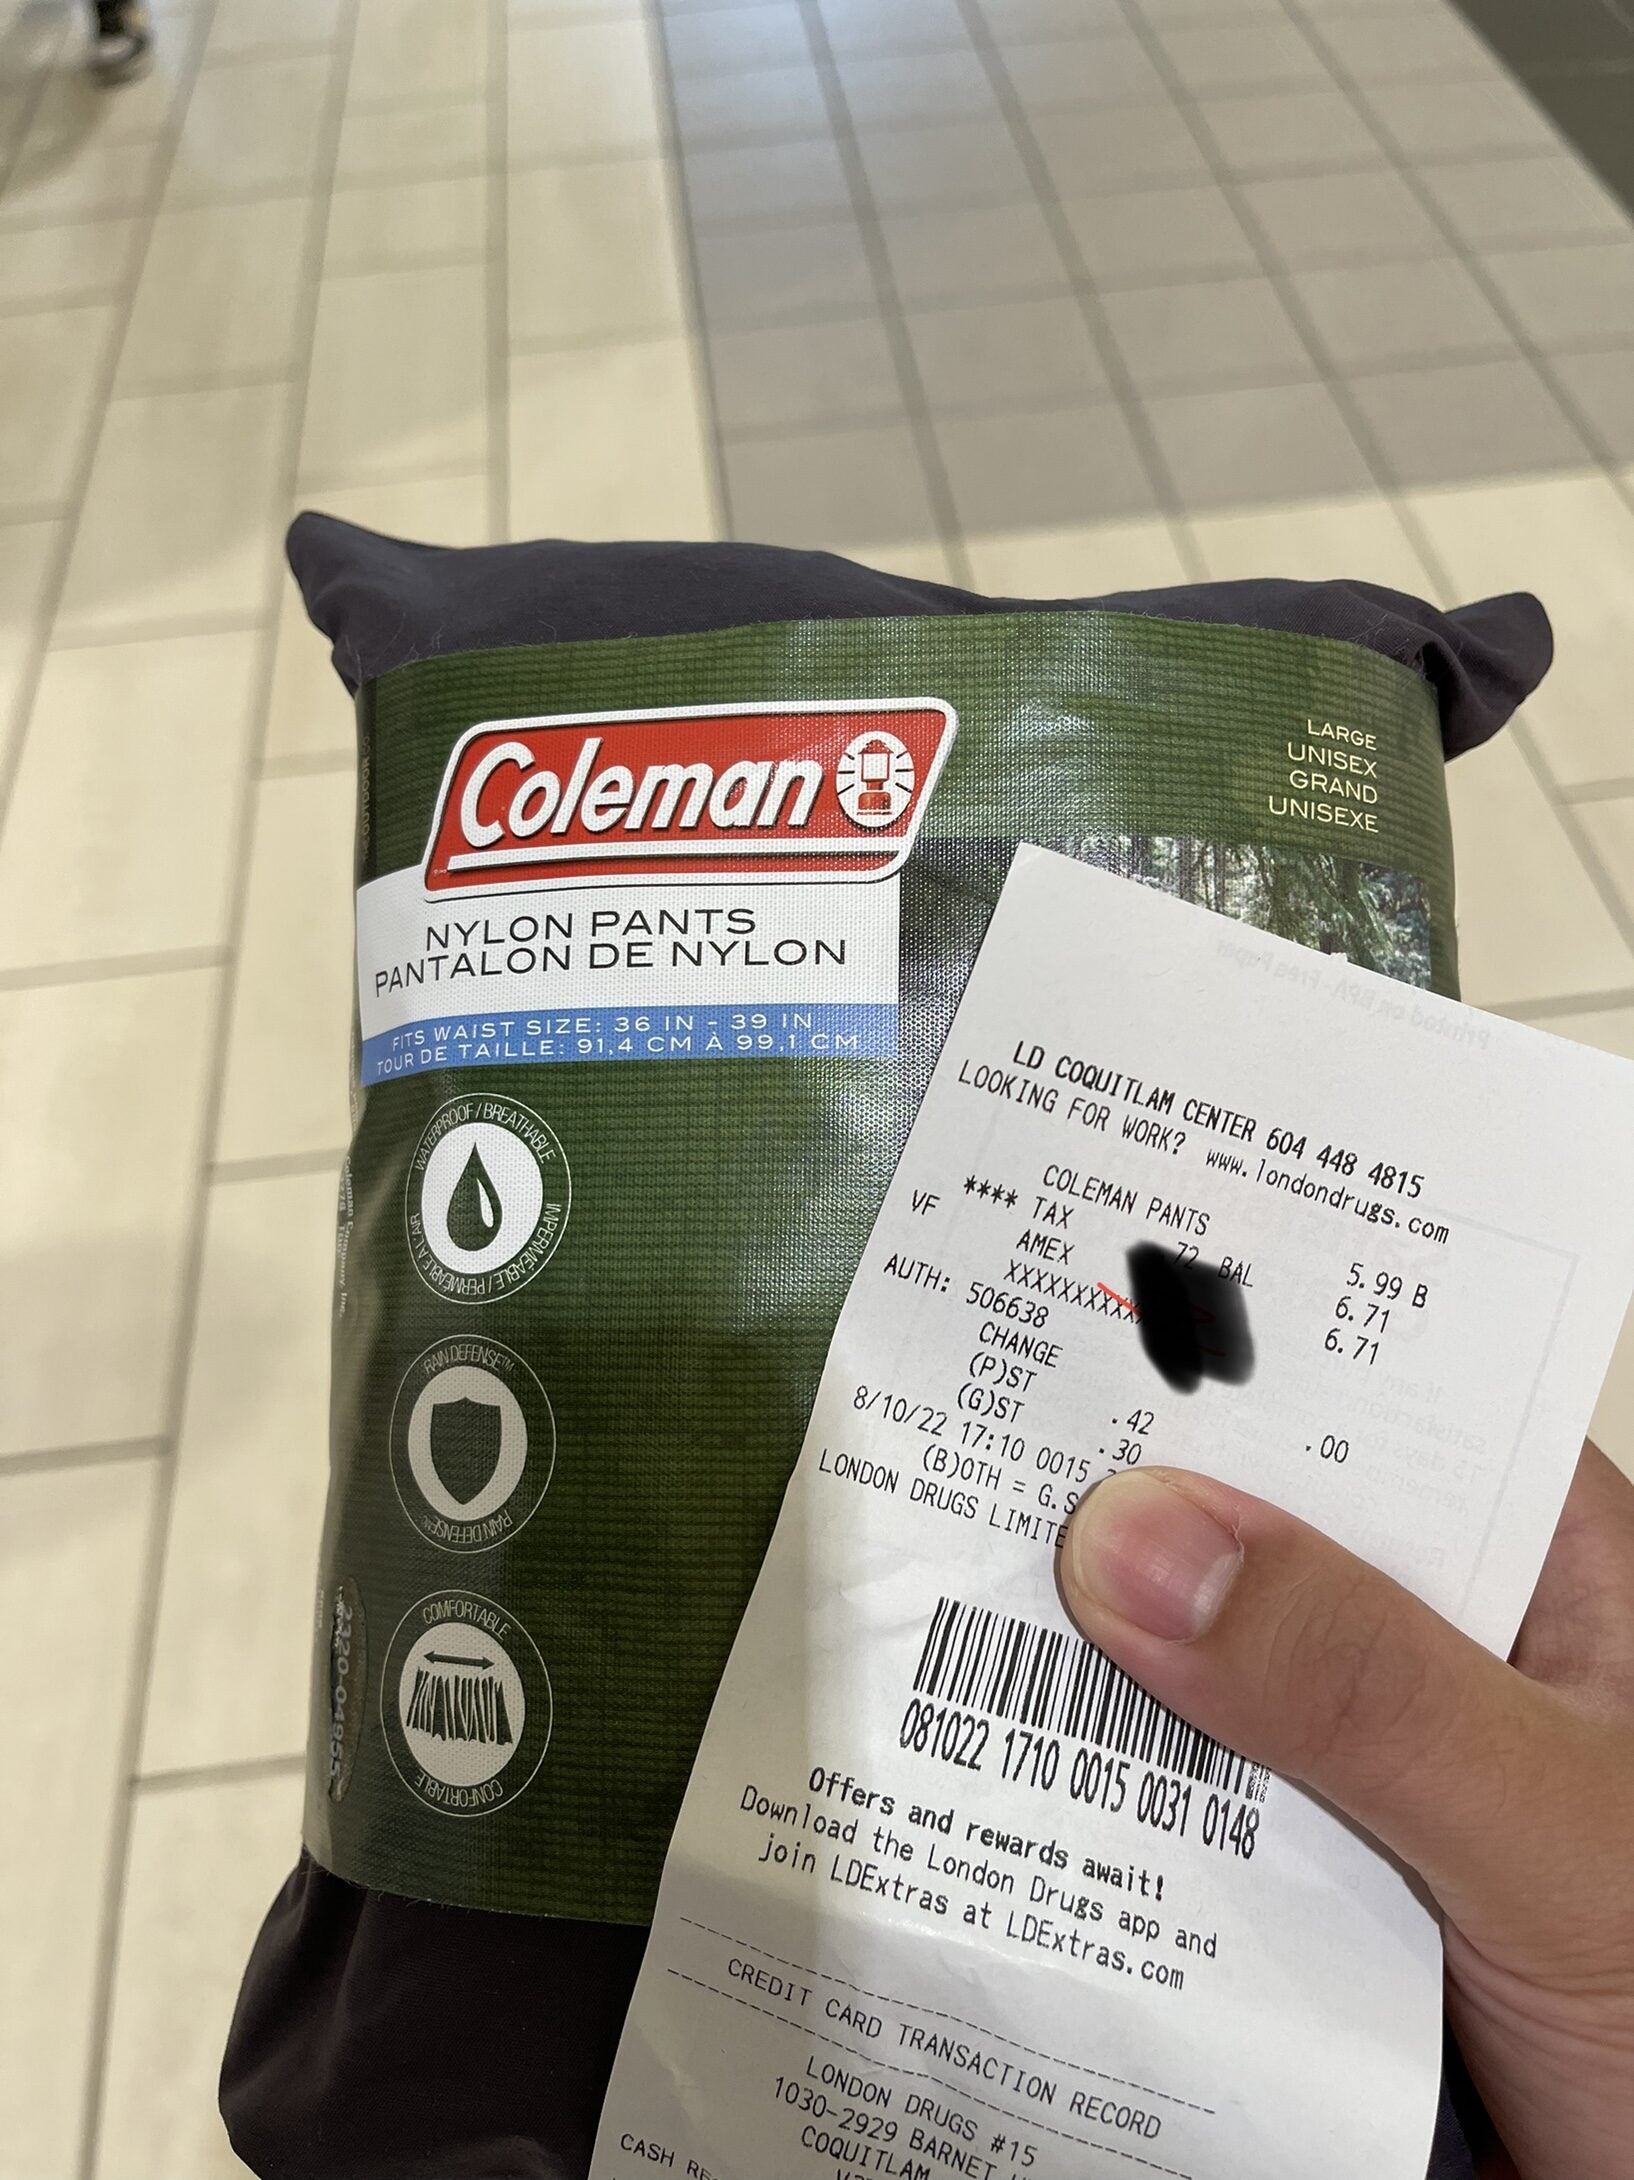 London Drugs] Coleman nylon pants 5.99 in store - RedFlagDeals.com